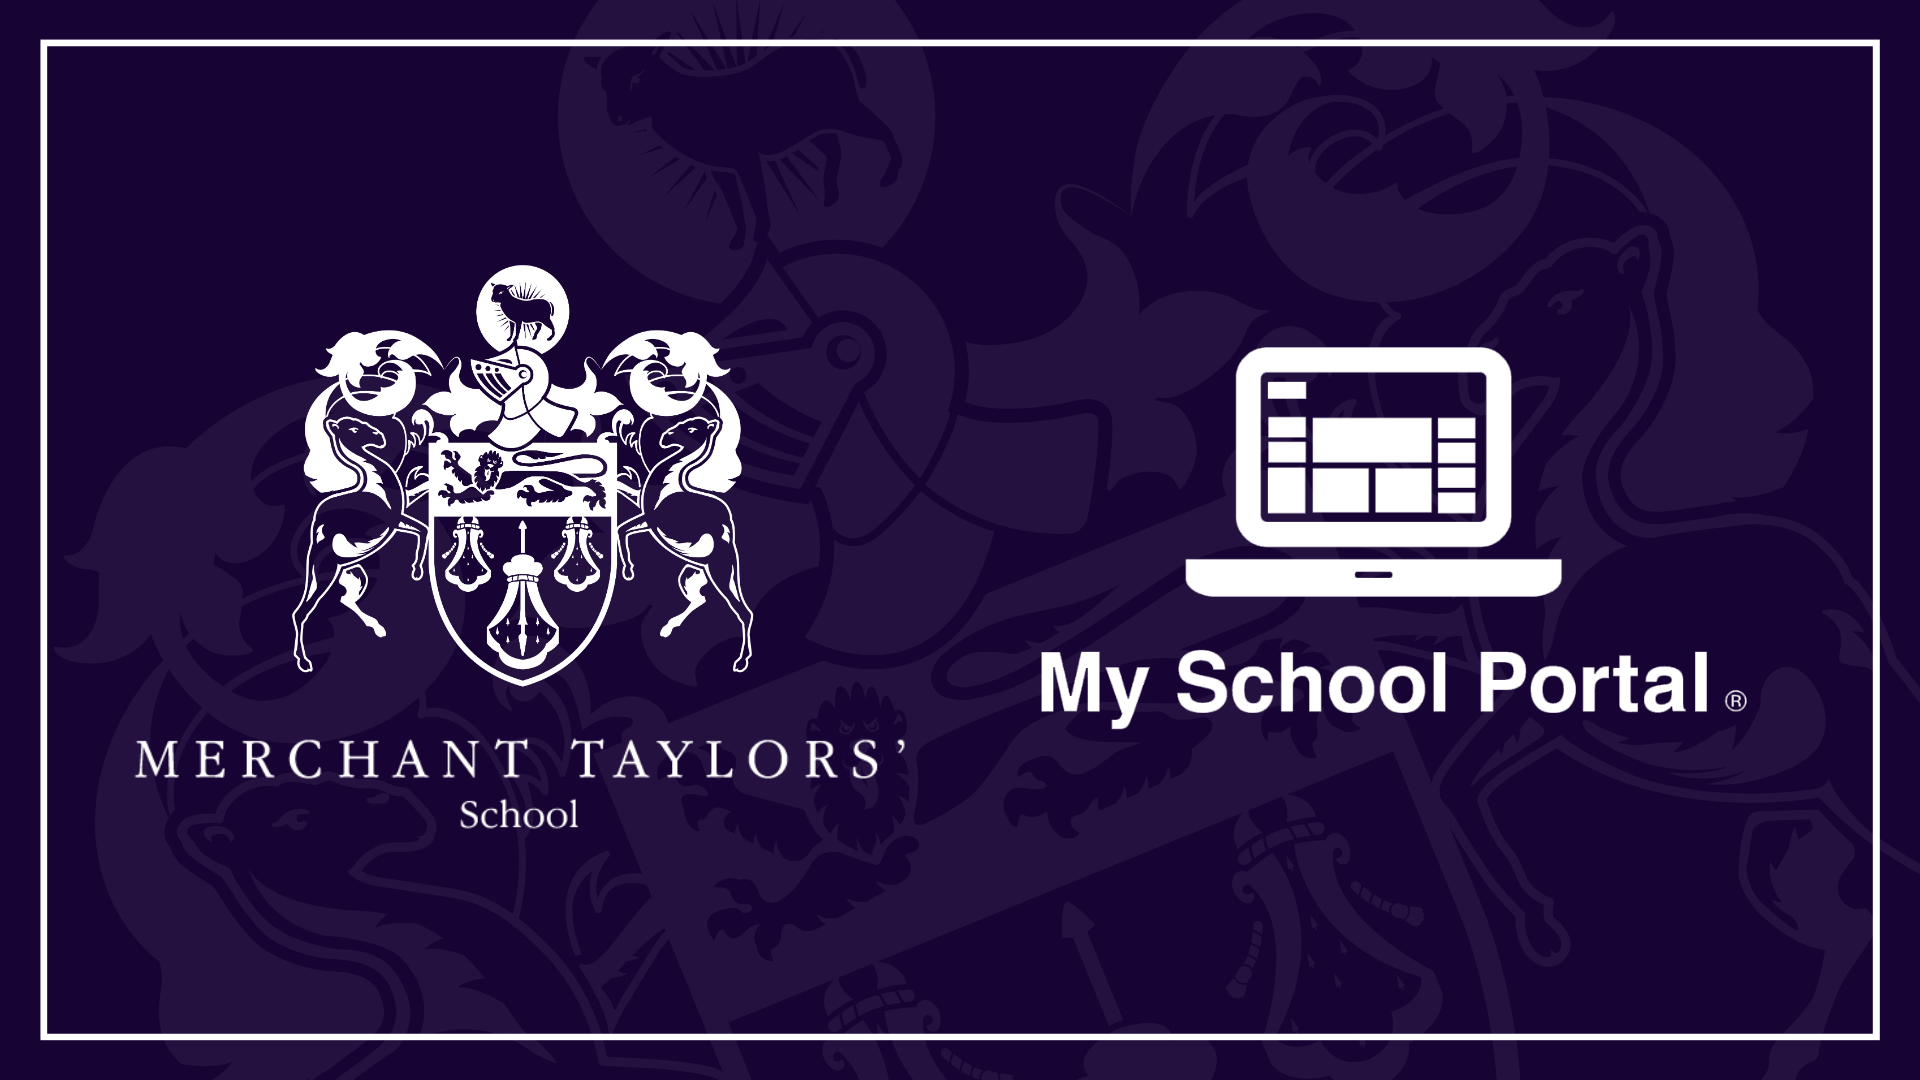 Merchant Taylors School & My School Portal logos on a purple background